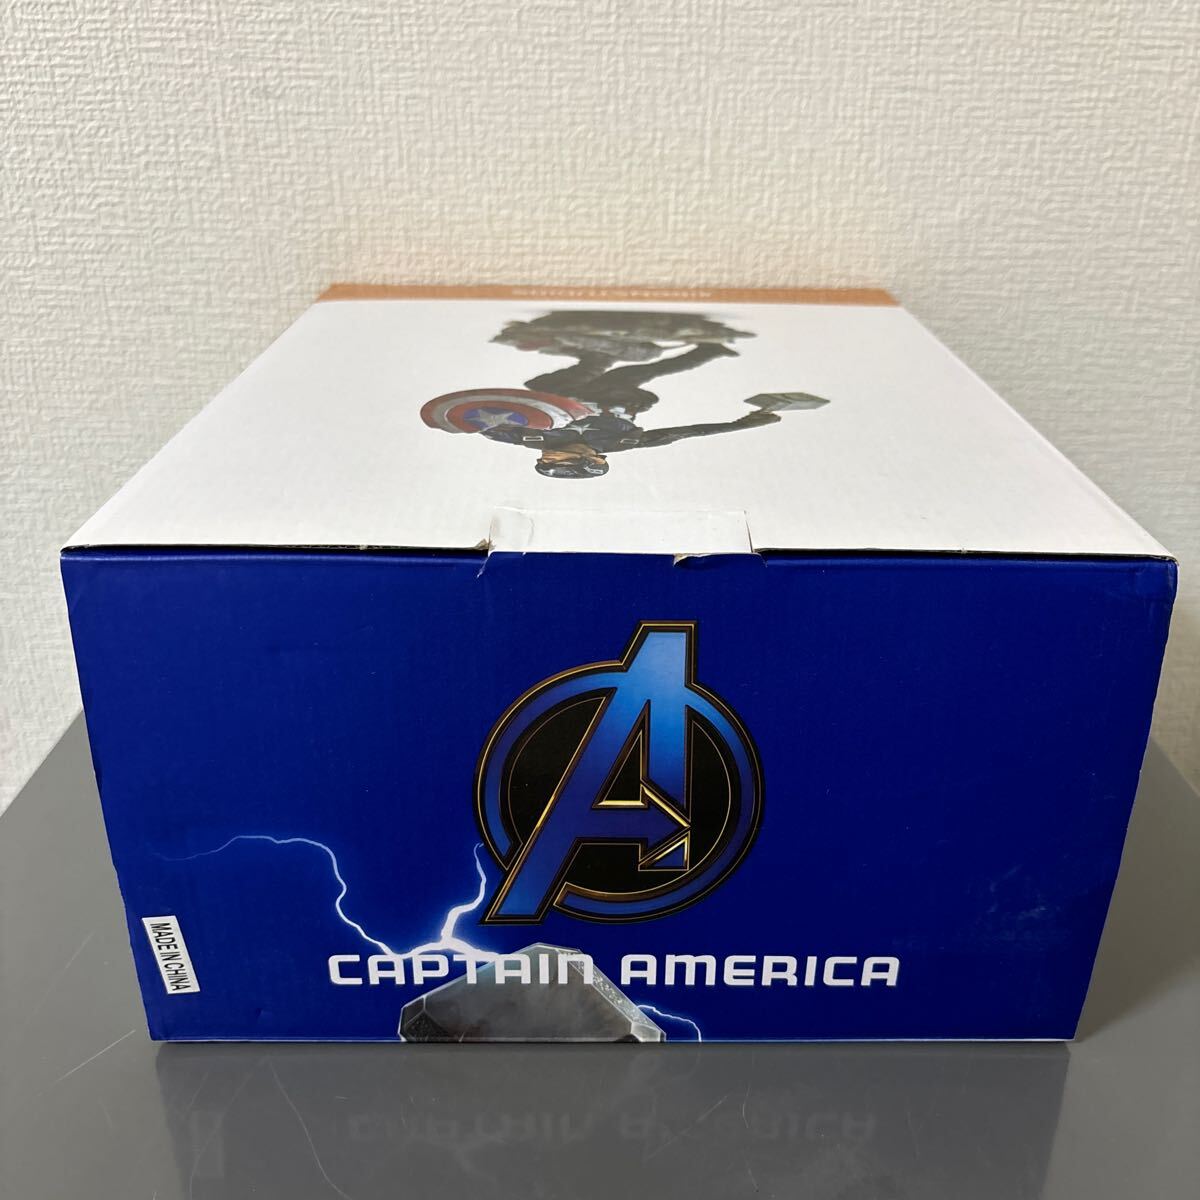 FIG Captain America s чай b Roger s Battle geo лама серии 1/10 искусство шкала старт chu- конечный продукт фигурка IRON STUDIOS